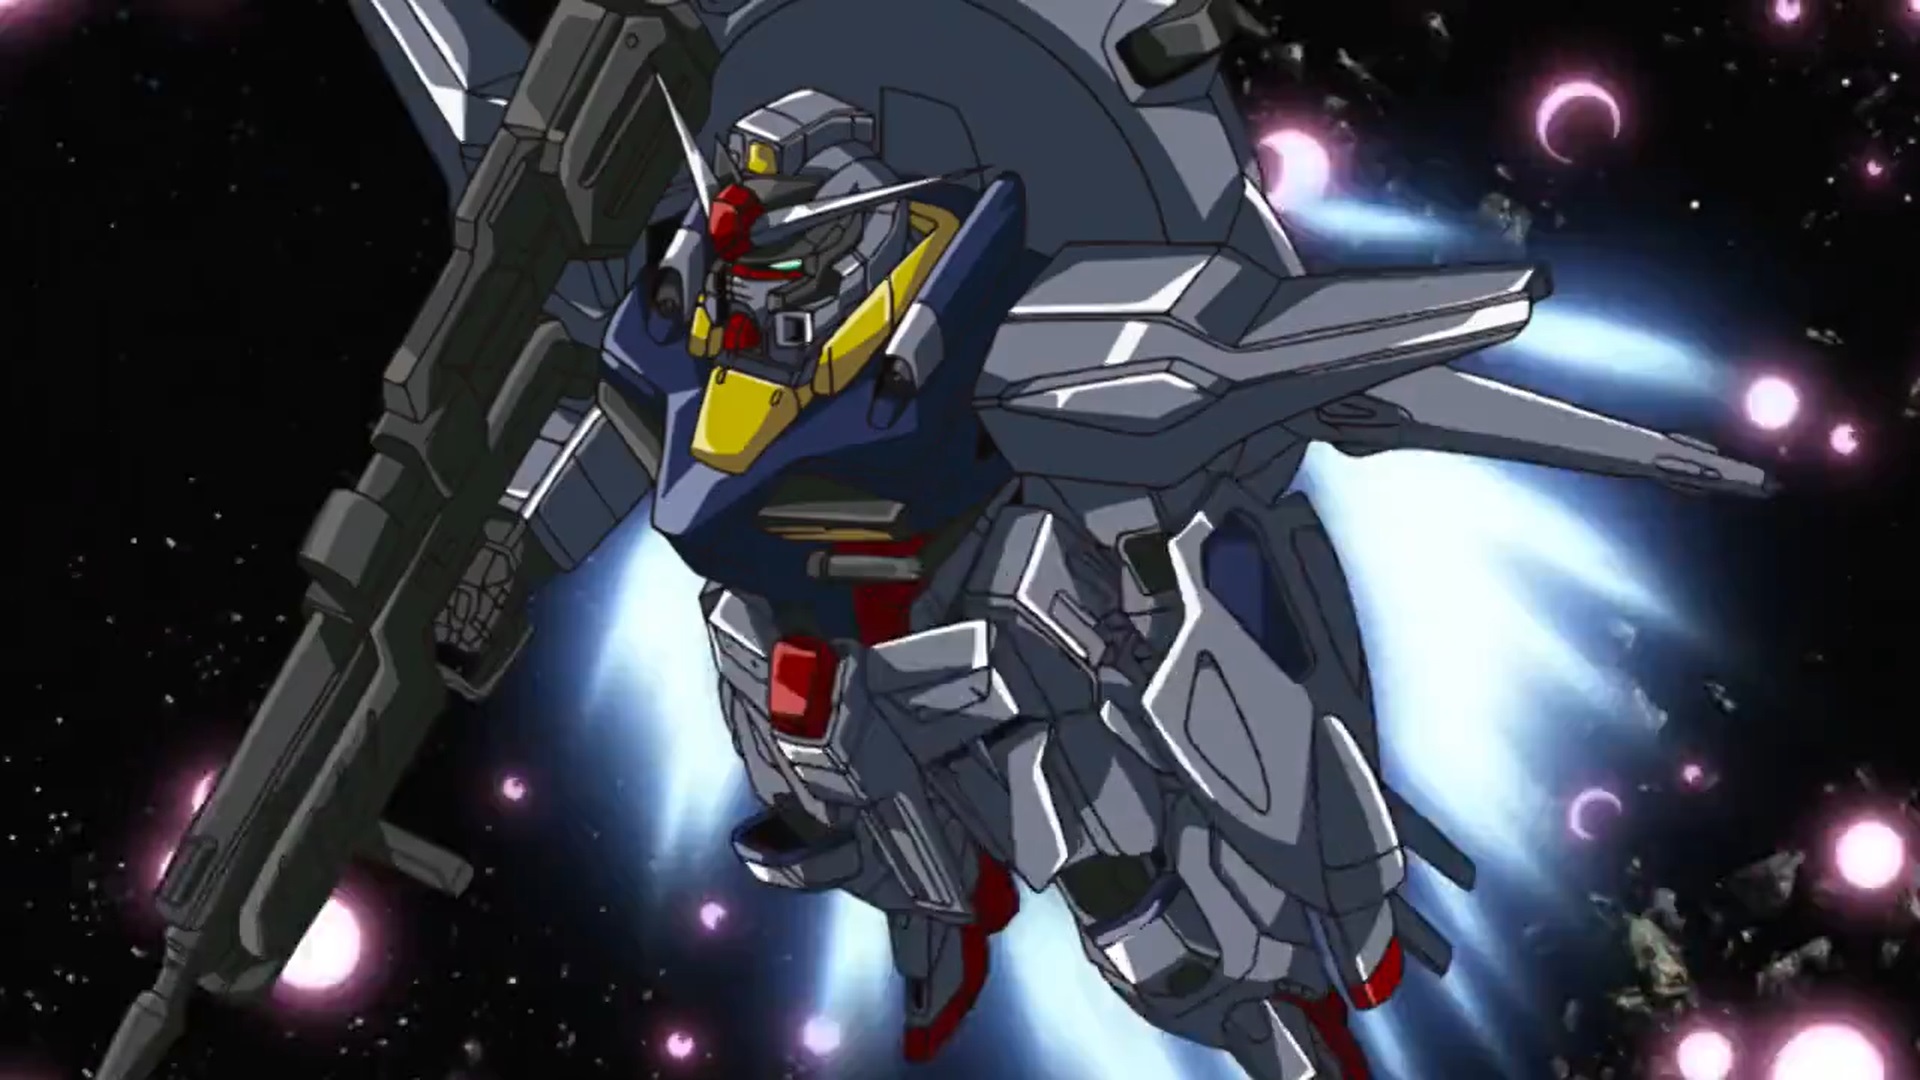 Anime 1920x1080 anime Anime screenshot Mobile Suit Gundam SEED Gundam Super Robot Taisen Providence Gundam artwork digital art